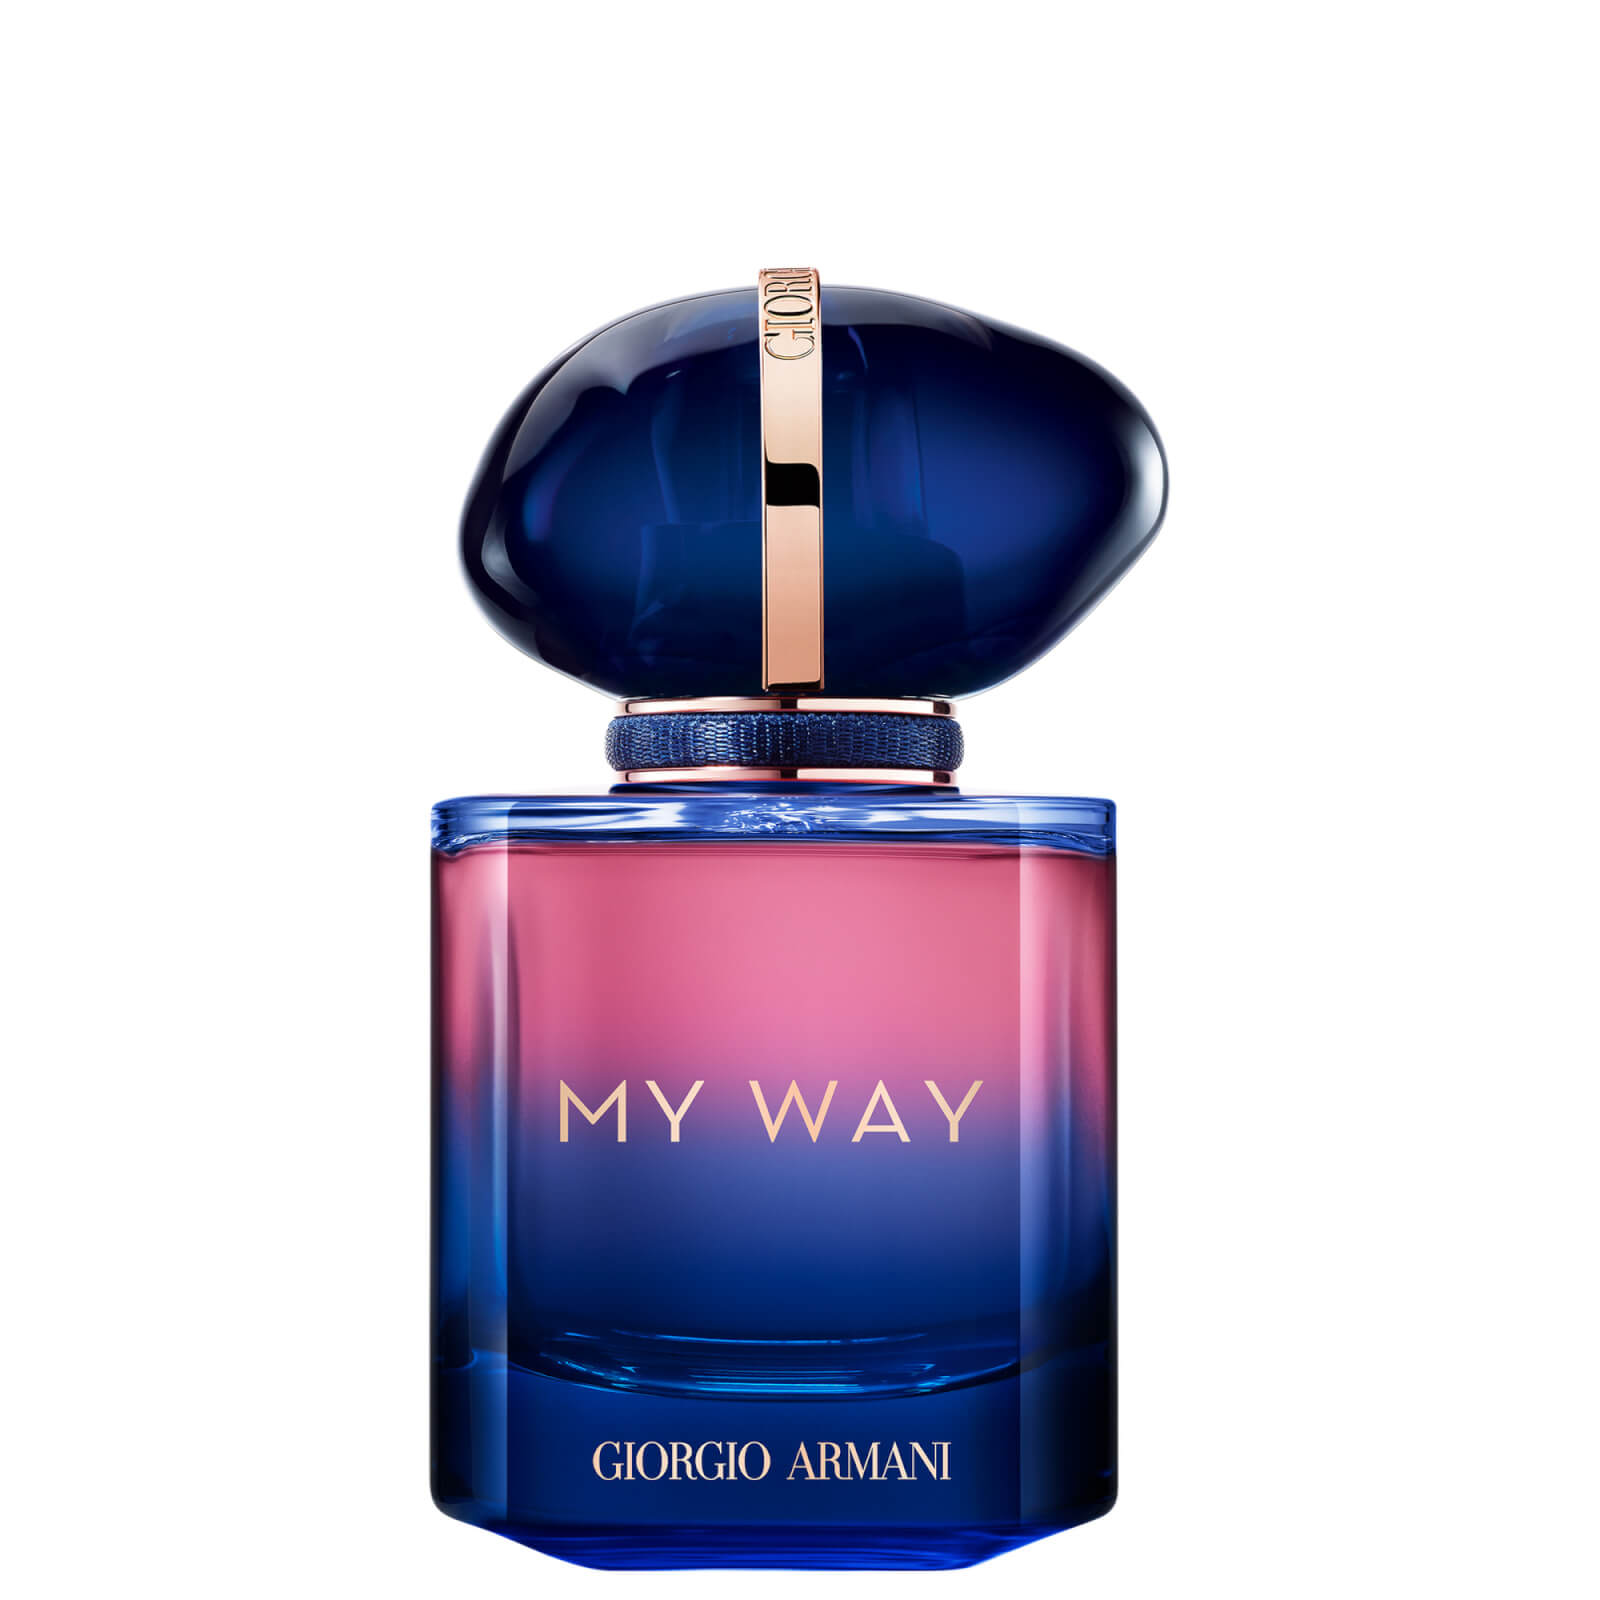 Image of Giorgio Armani My Way Parfum 30ml